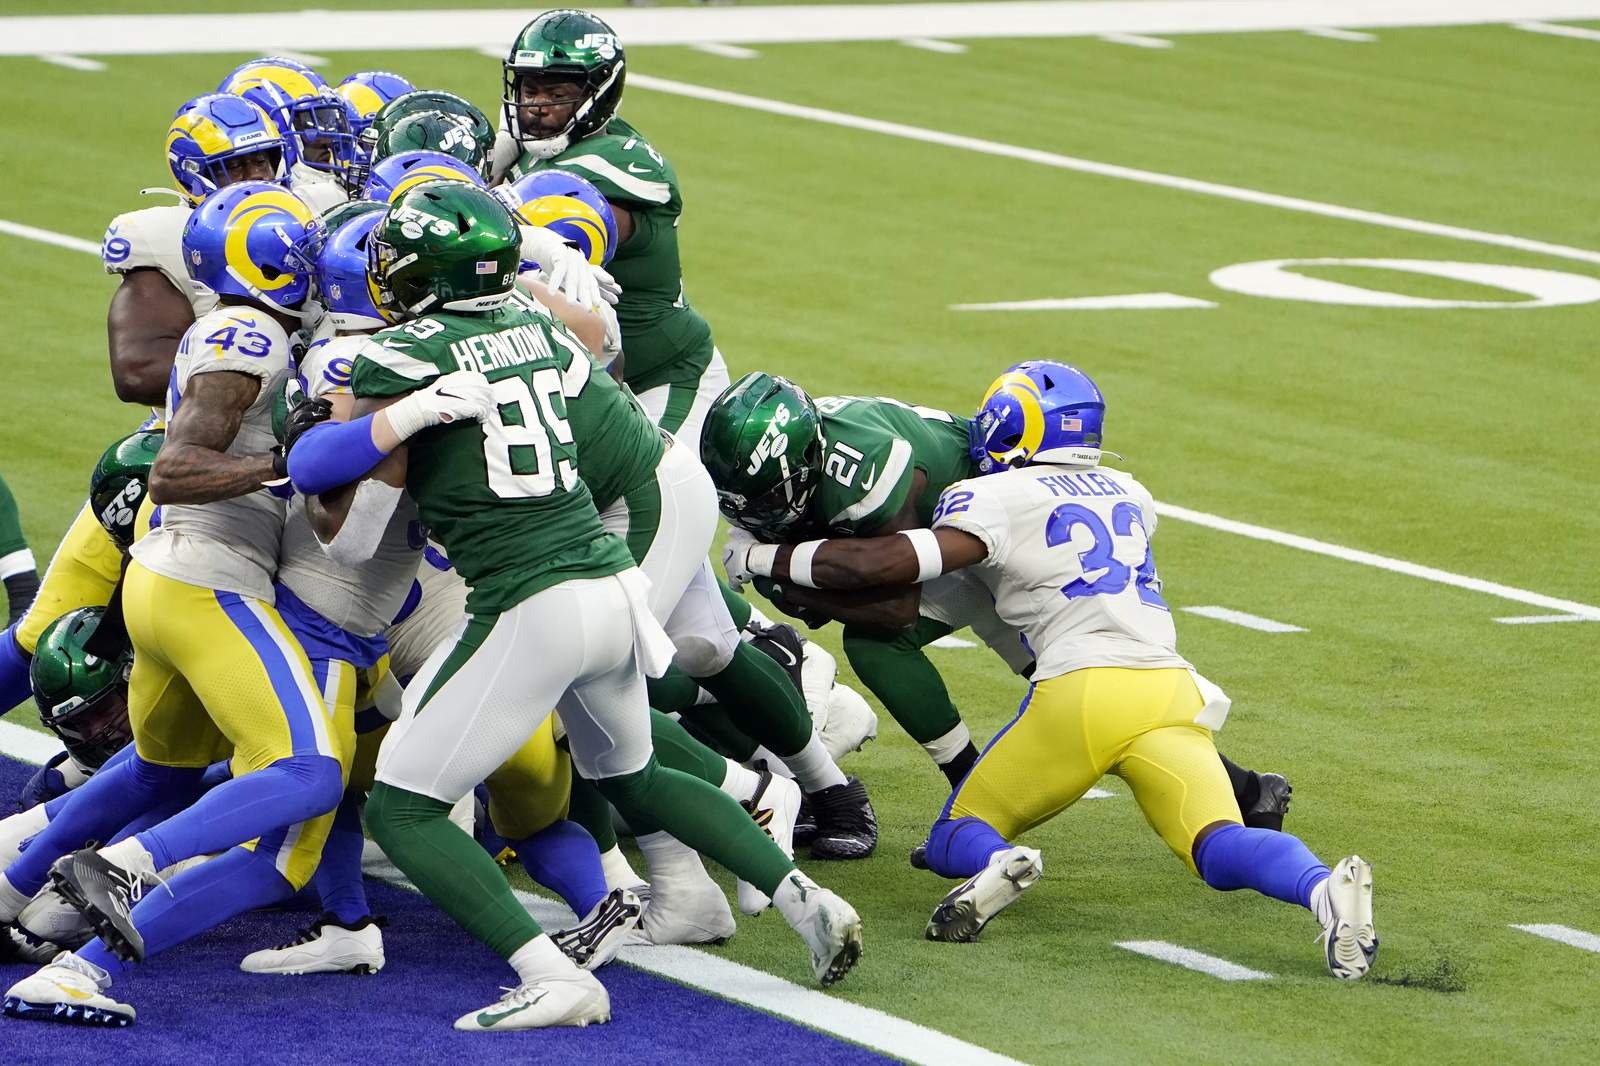 Erase that 0!: Jets edge Rams 23-20, avoid winless season